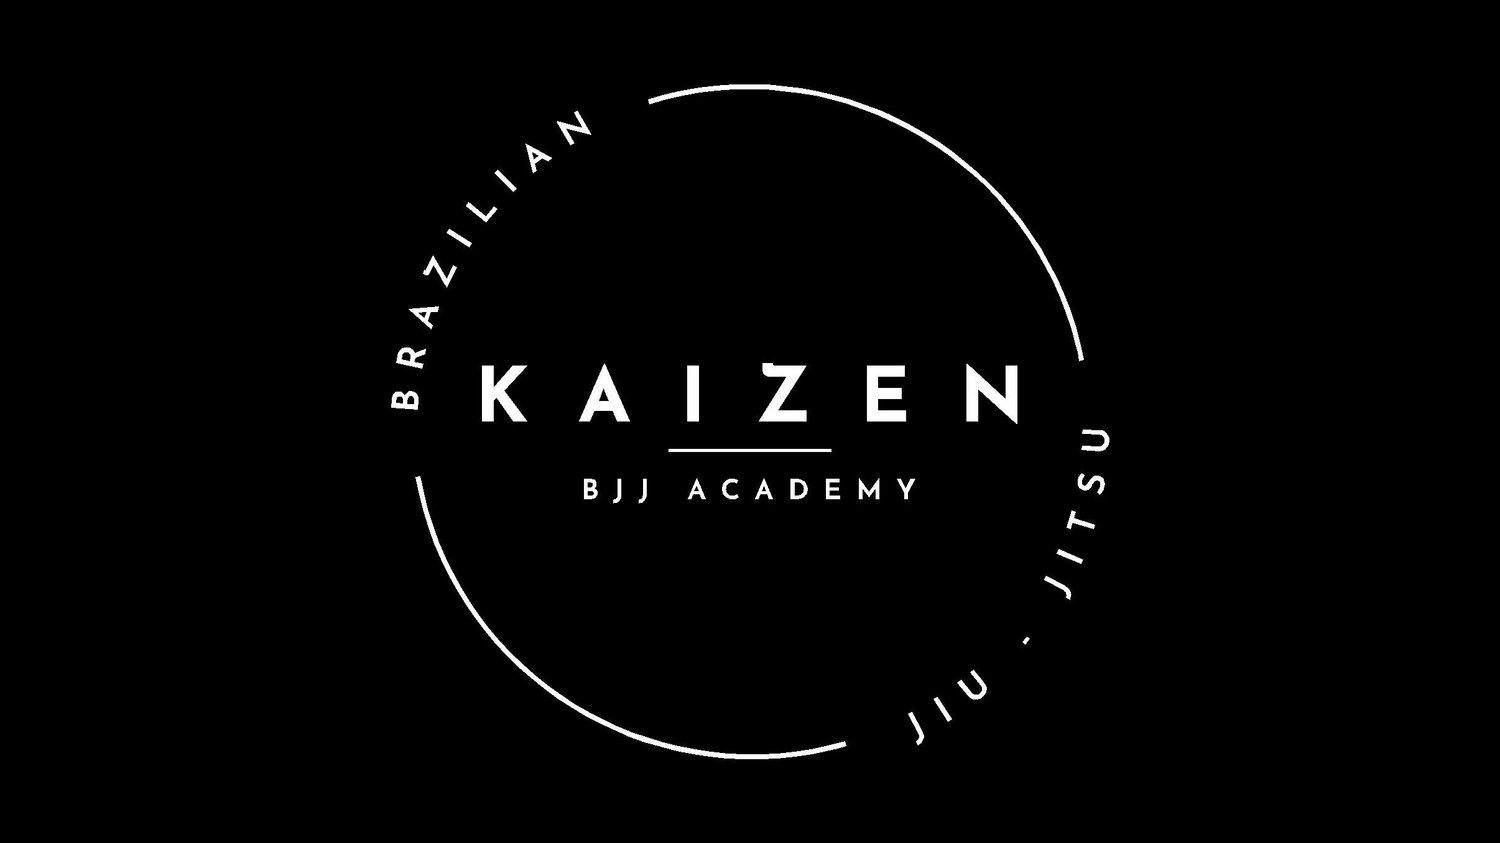 Kaizen BJJ Academy - Brazilian Jiu-Jitsu Training in Eagle Rock, Los Angeles